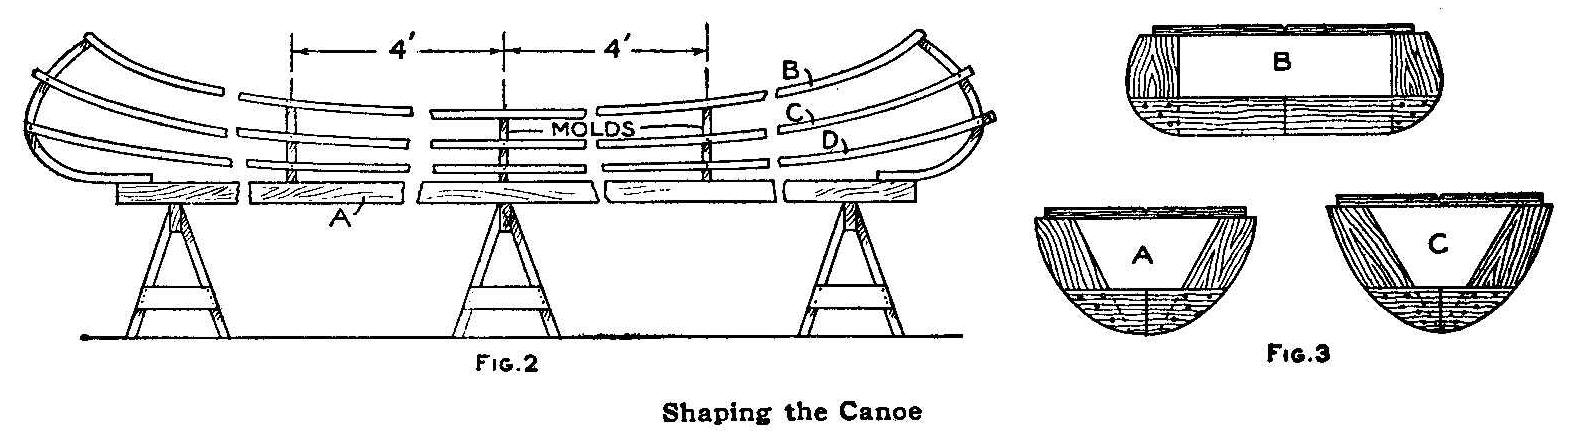 Shaping the Canoe